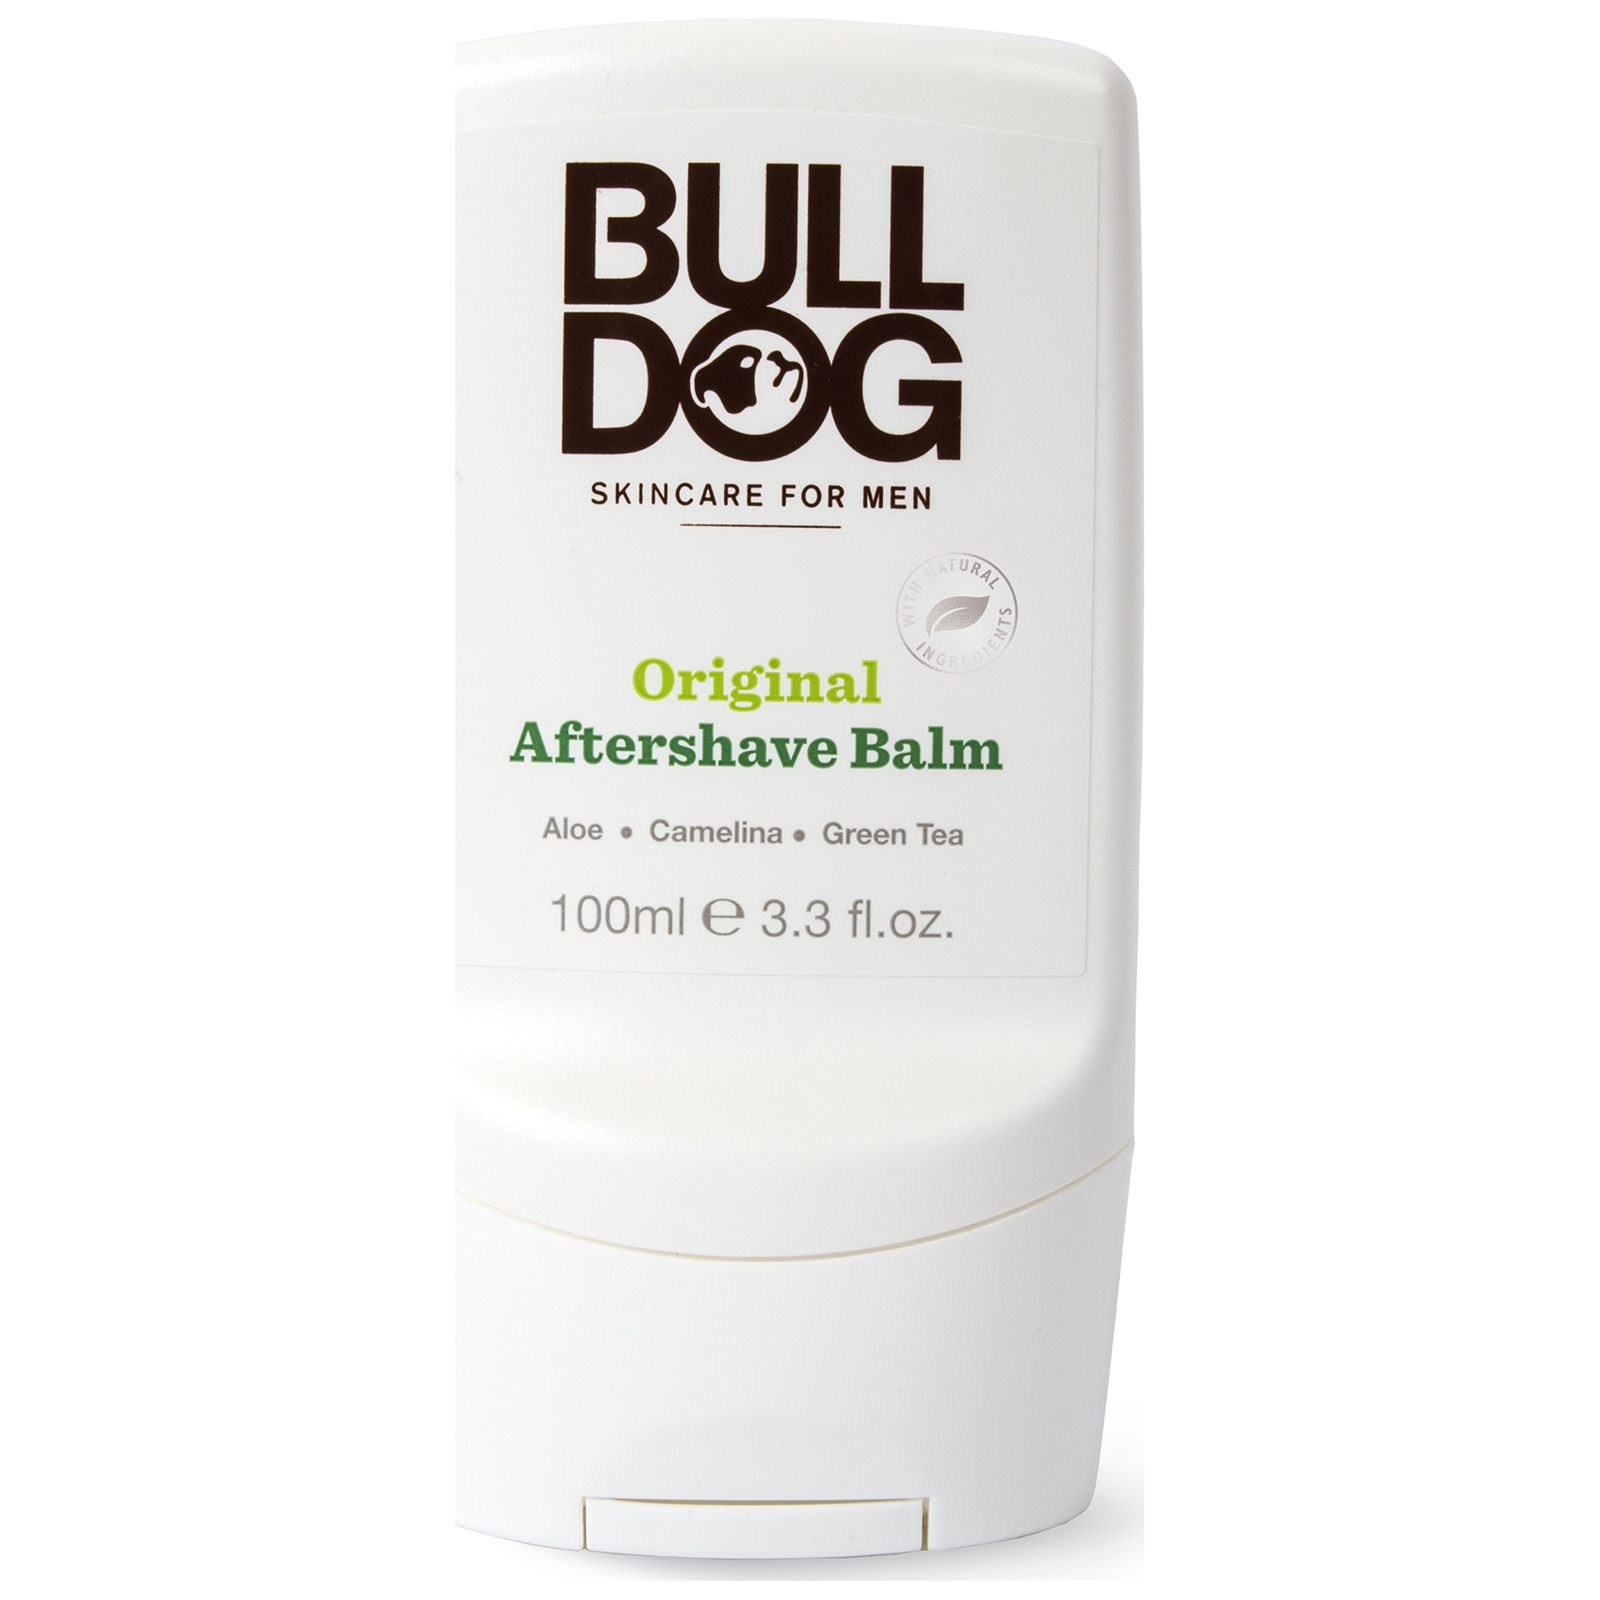 Bulldog Original After-Shave Balm 100ml